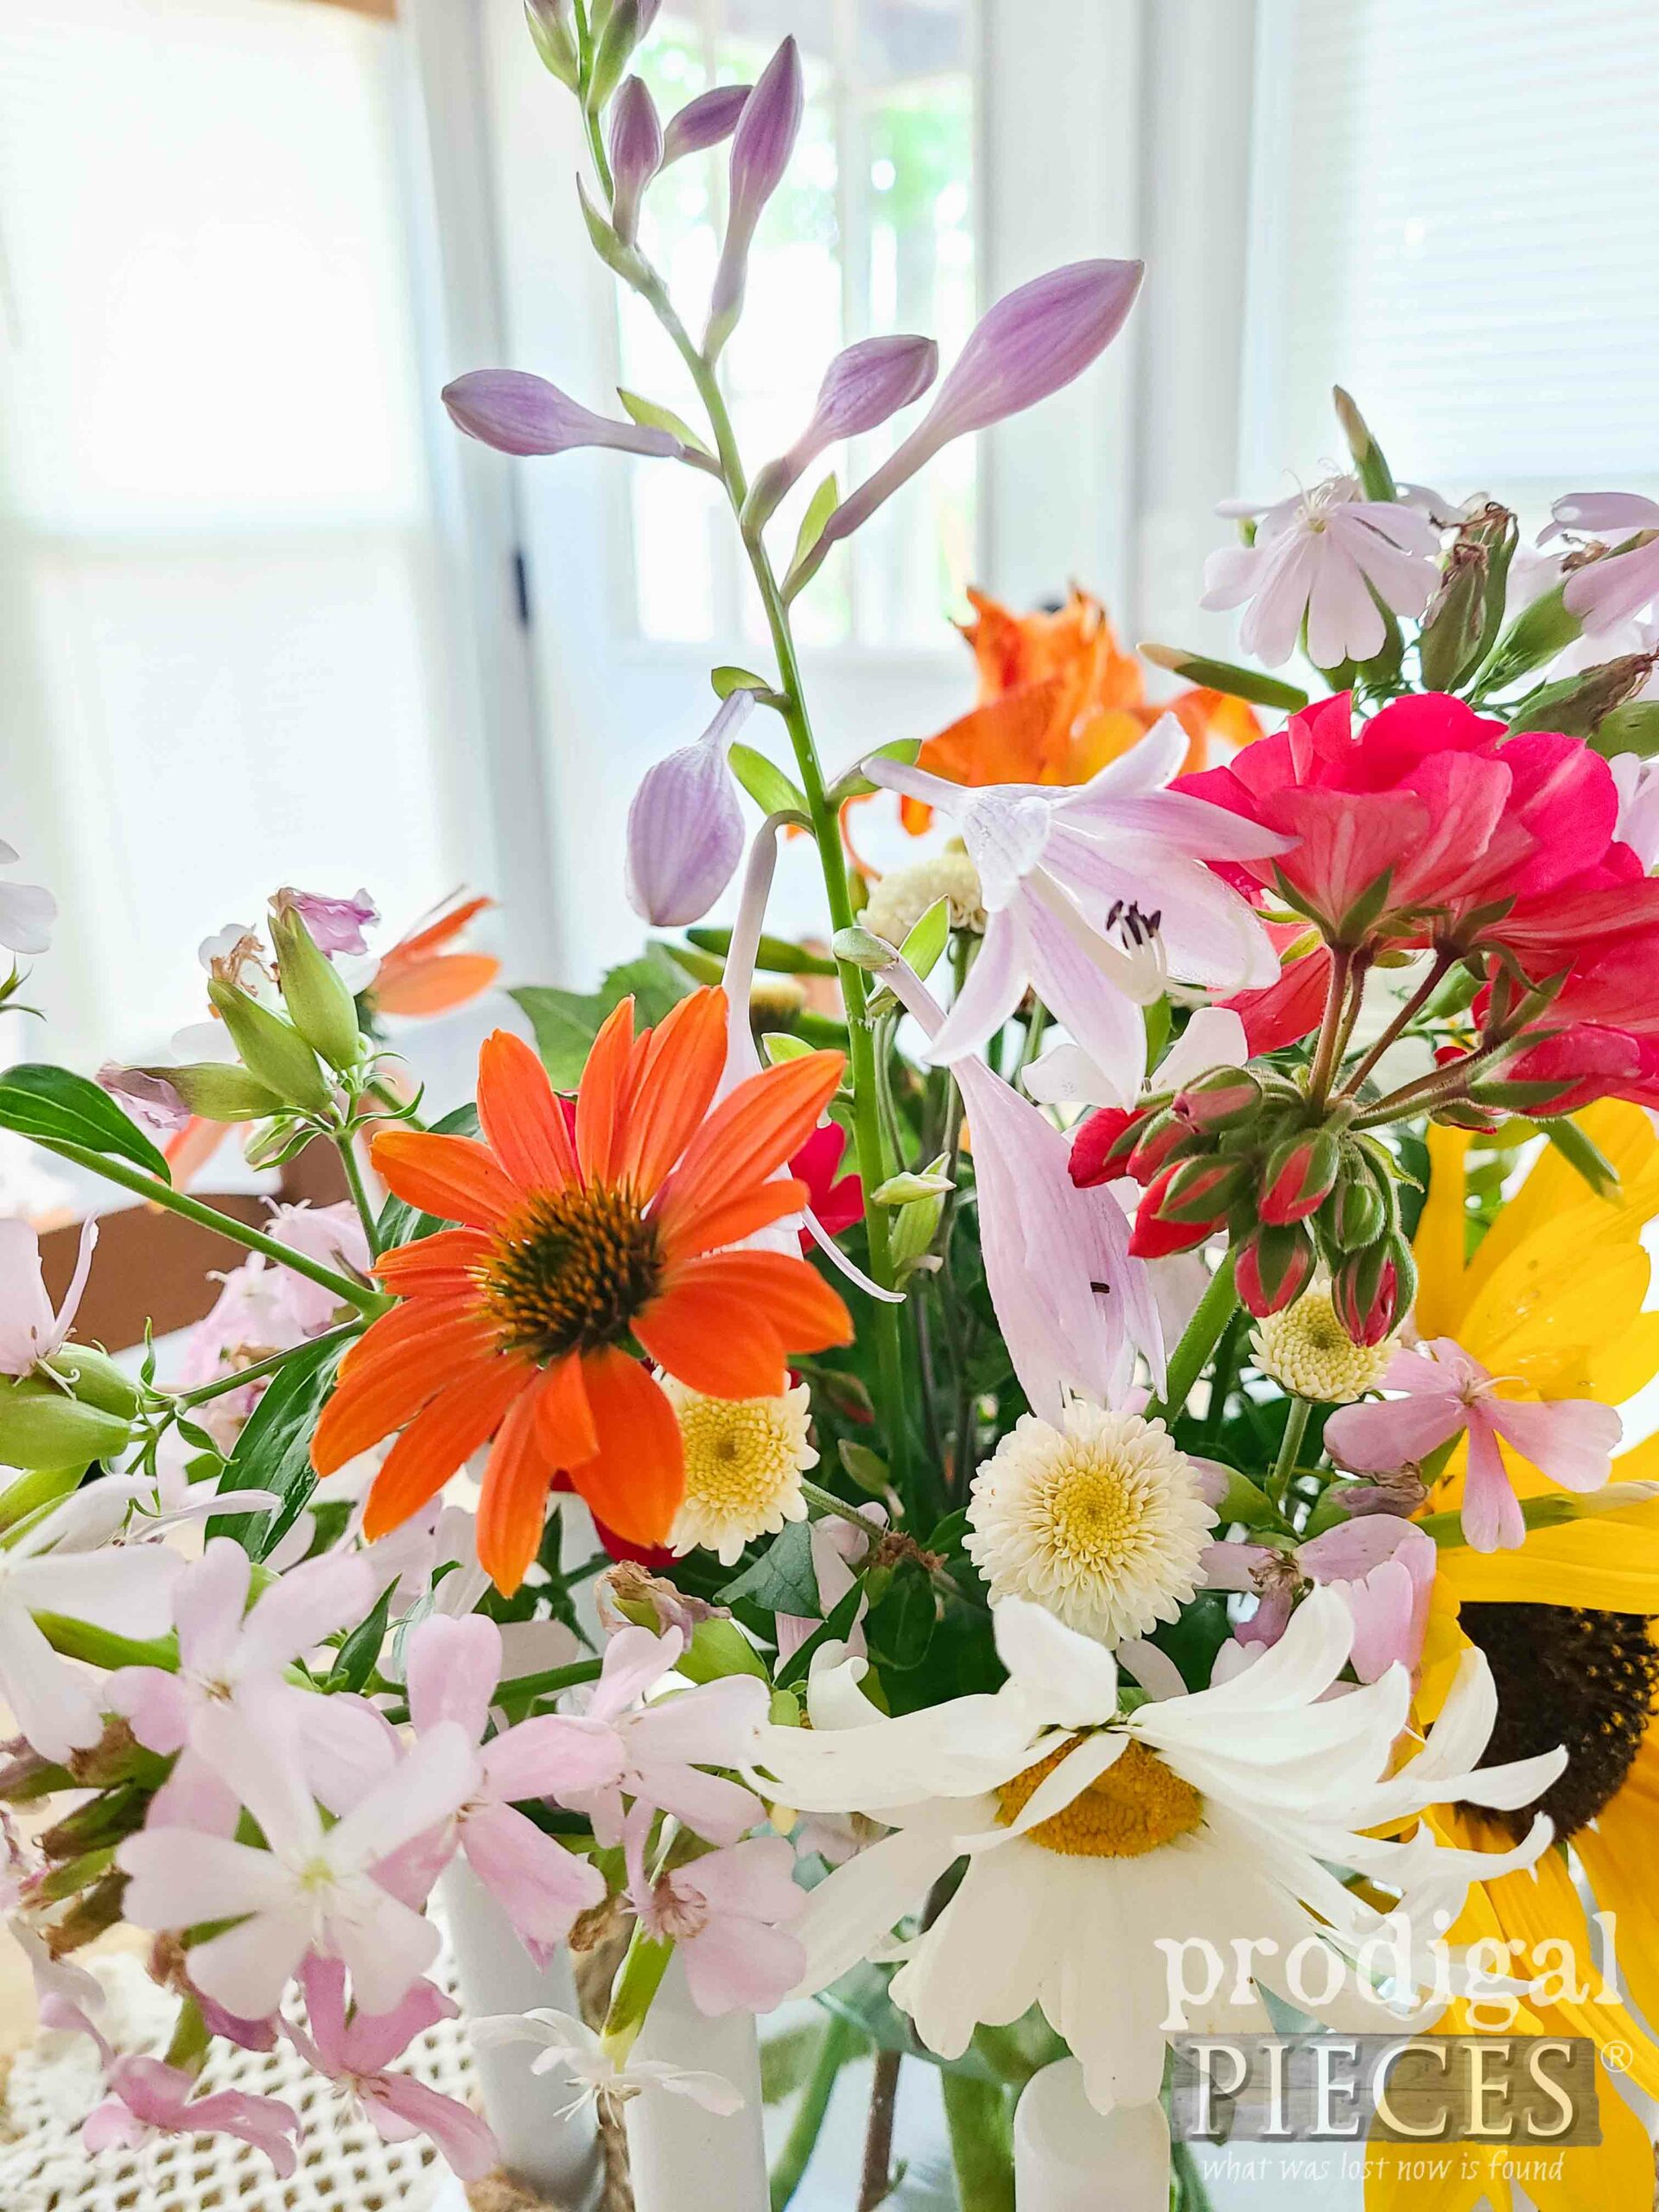 Hand-Picked Flower Bouquet from Larissa of Prodigal Pieces Garden | prodigalpieces.com #prodigalpieces #flowers #garden